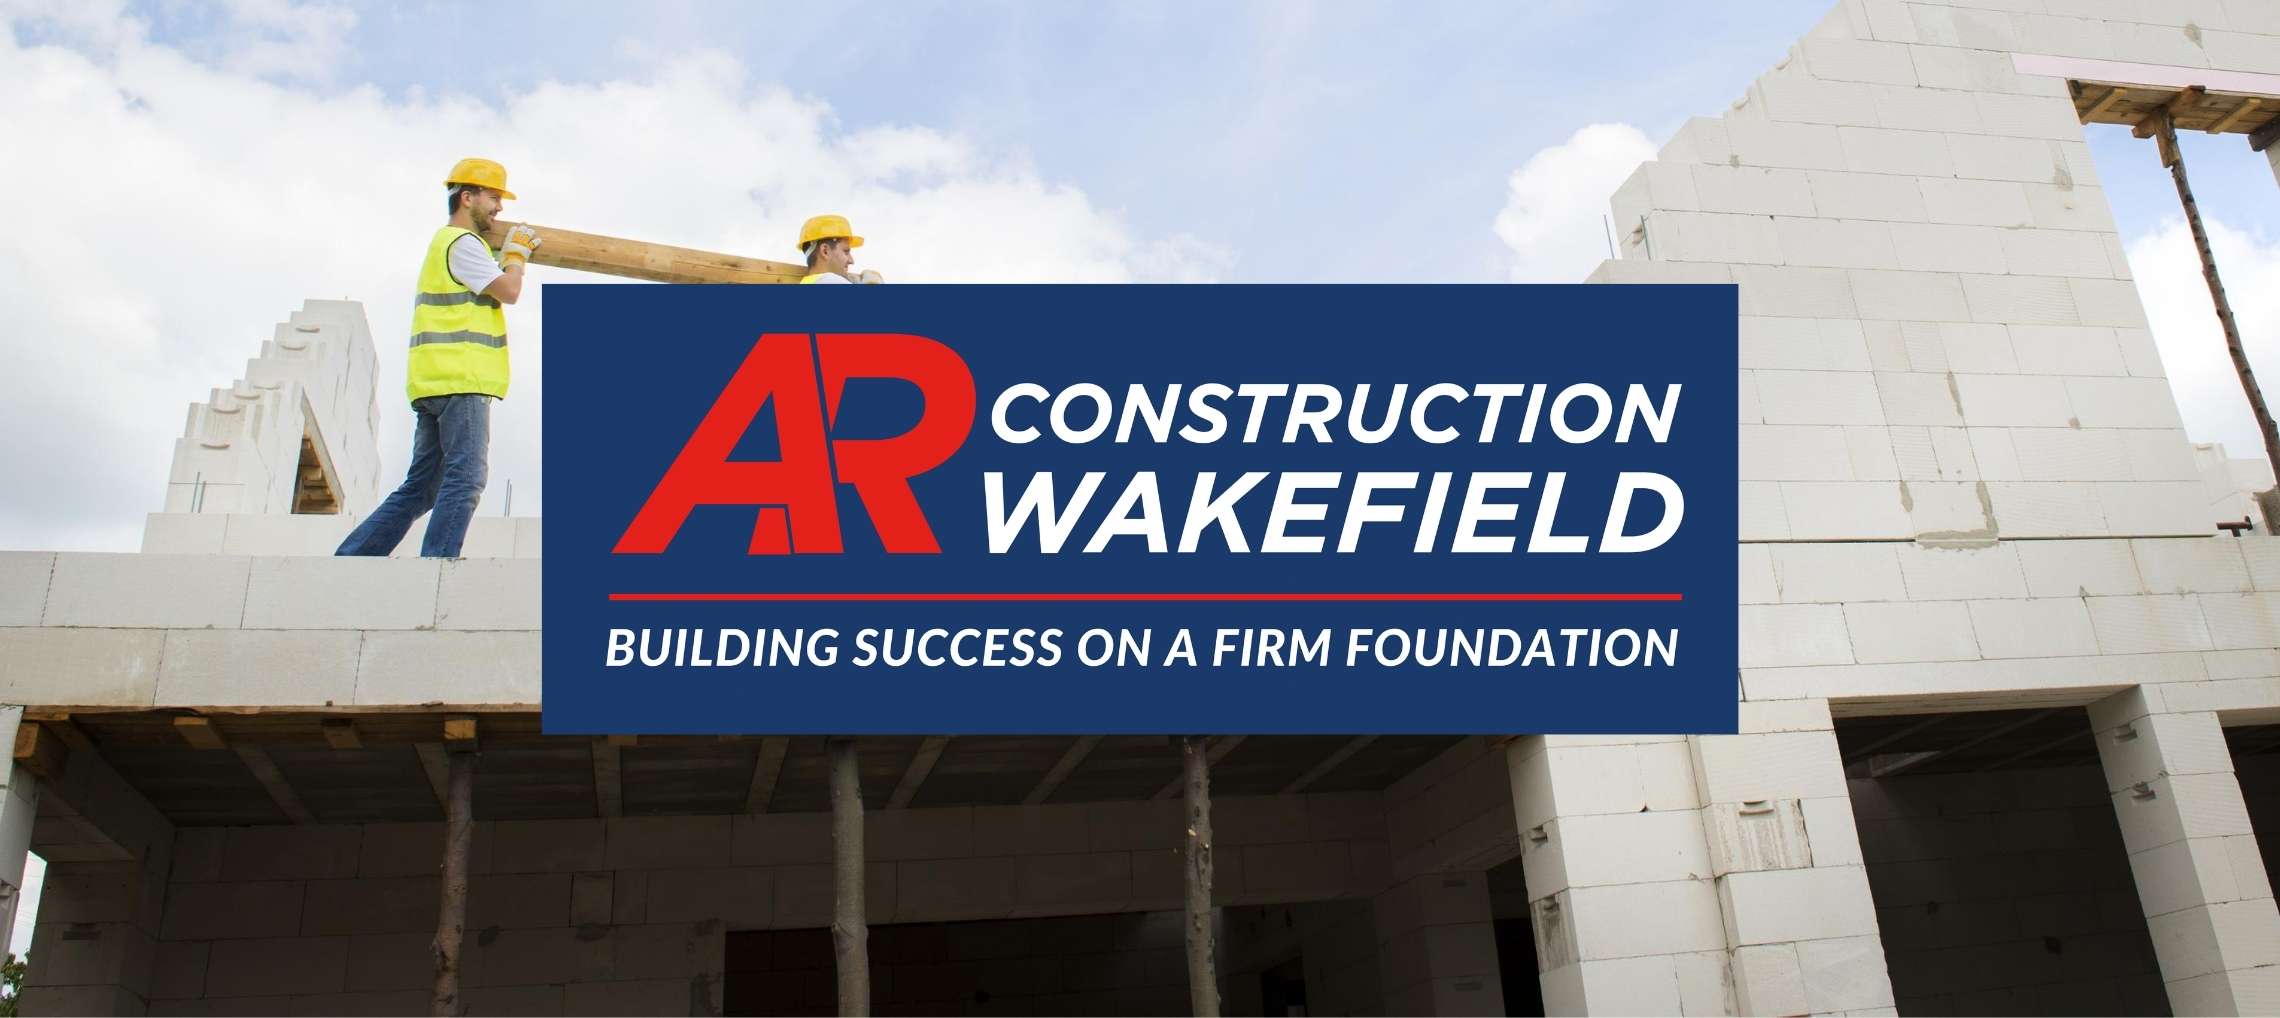 Builders Wakefield - AR Construction Wakefield